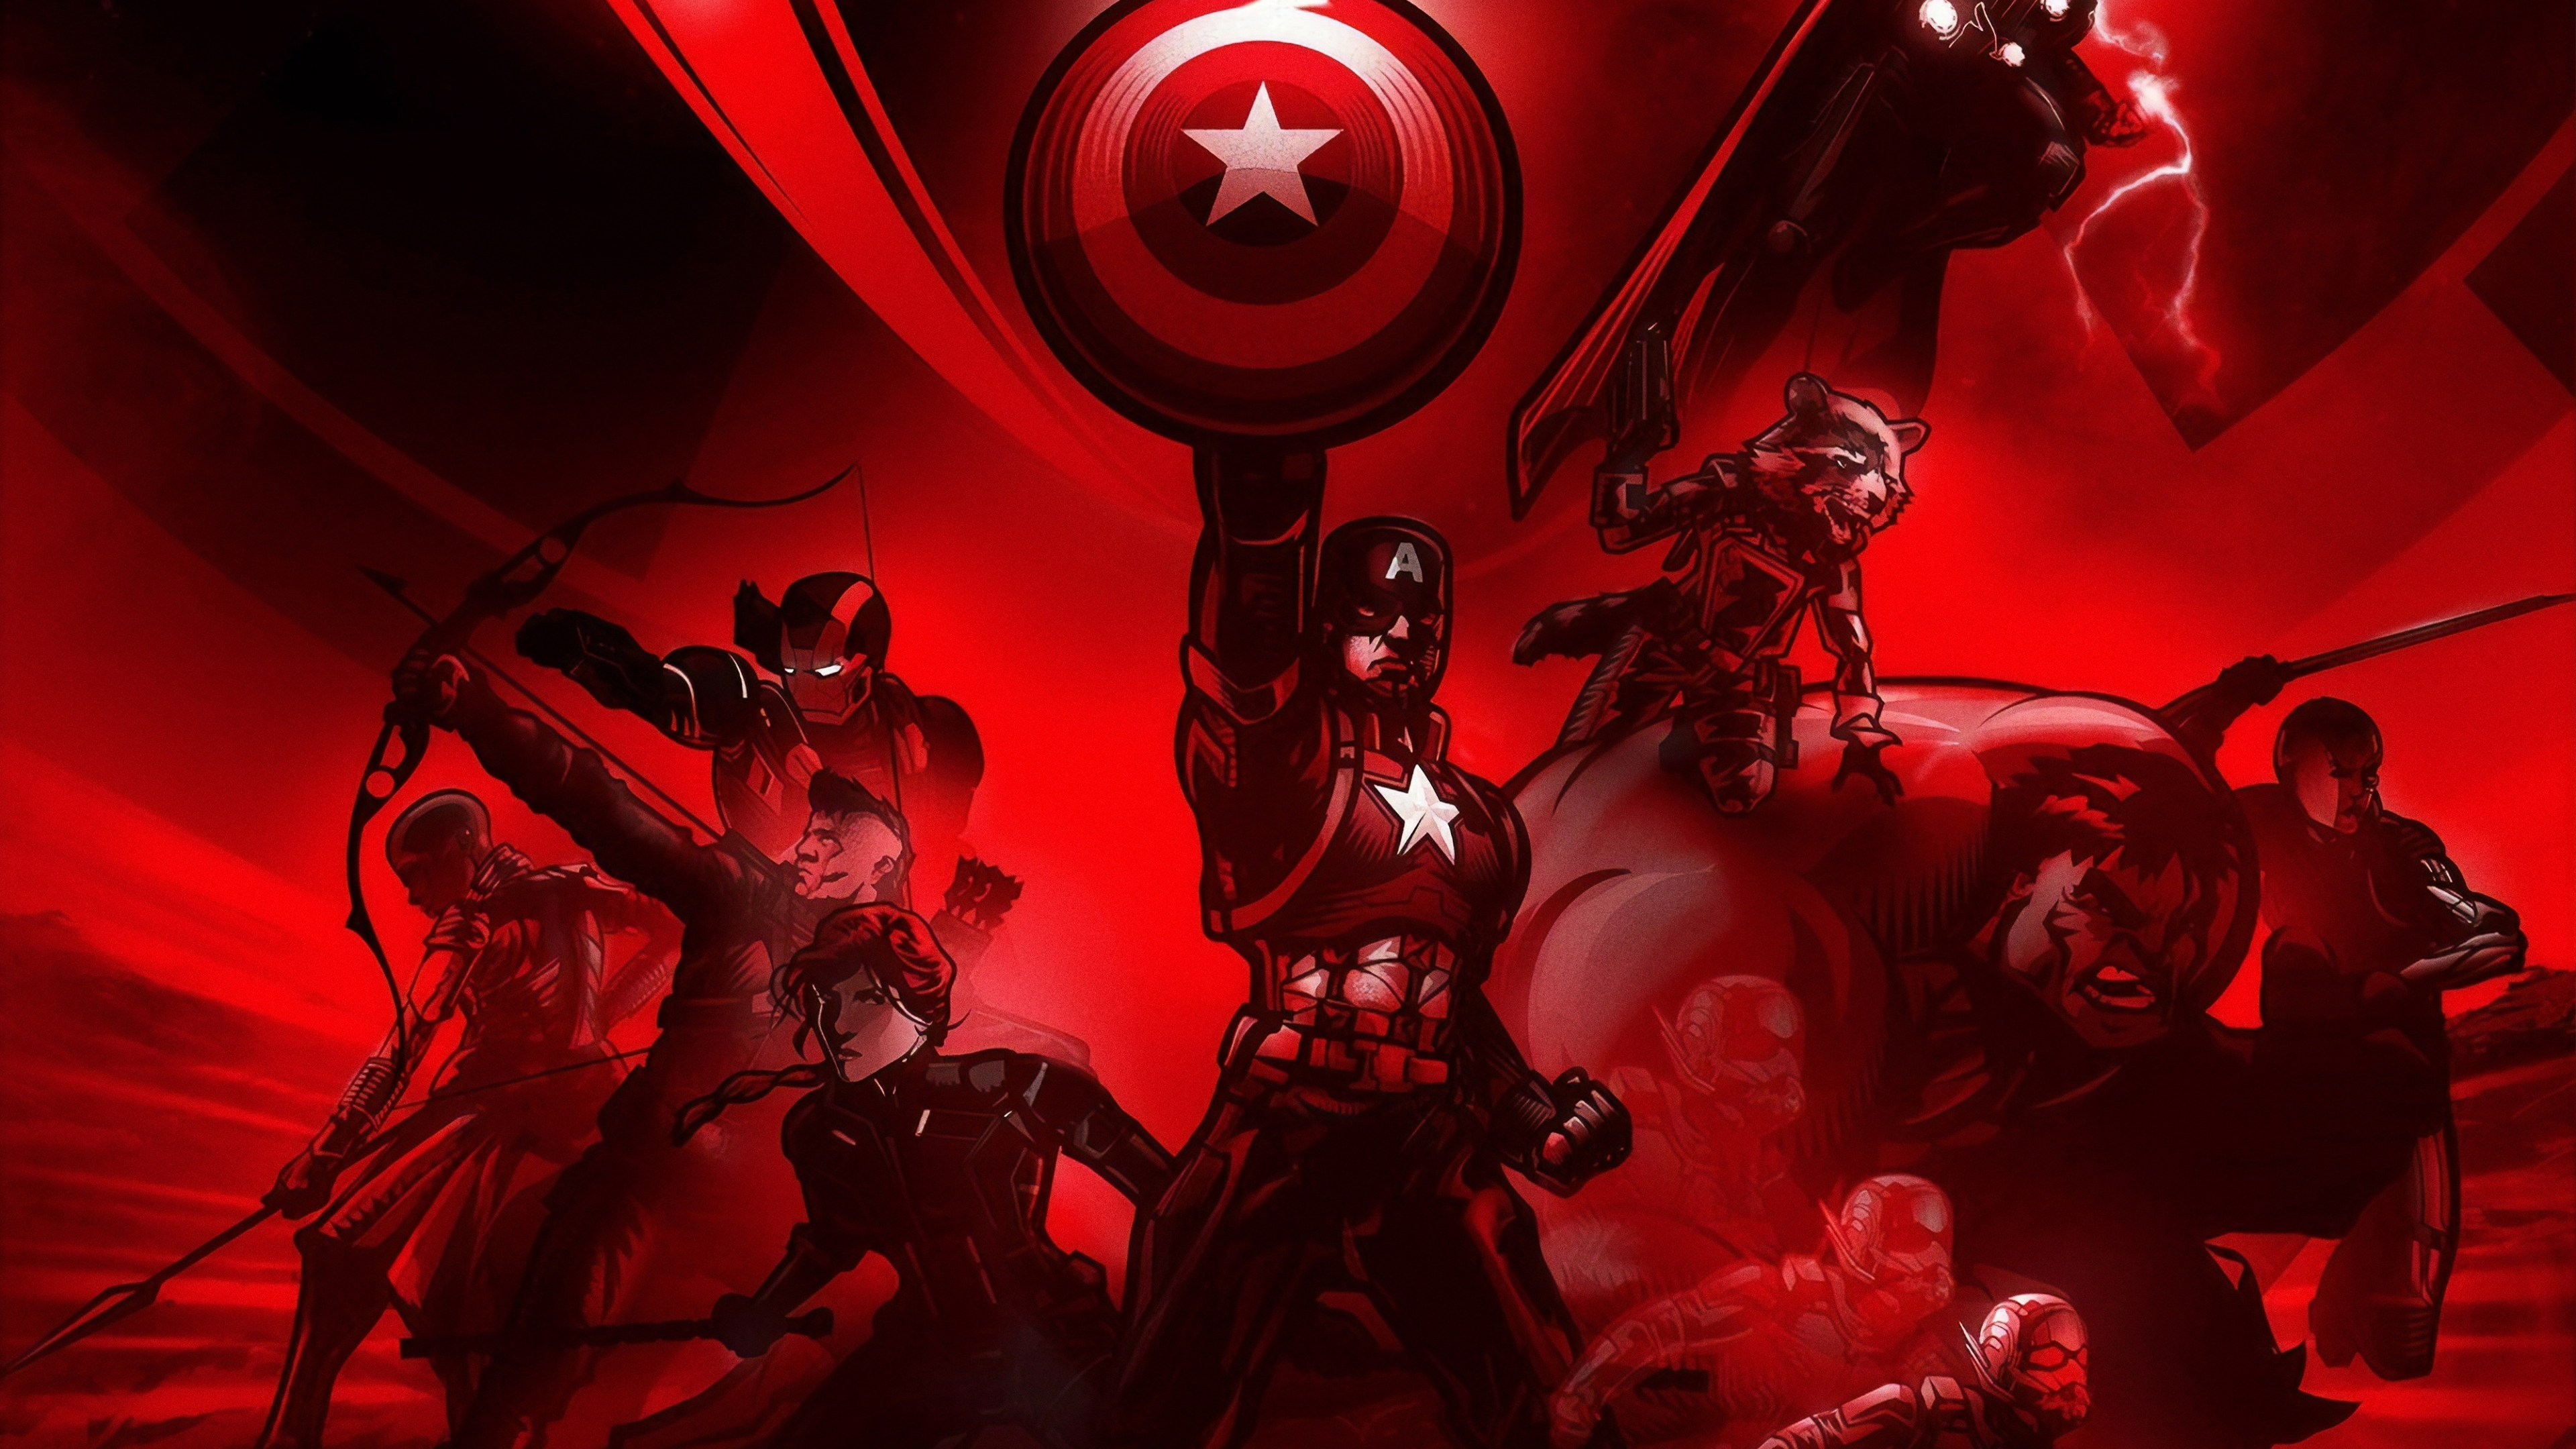 Download wallpaper 3840x2160 avengers: endgame, marvel superheroes, red 4k  wallpaper, uhd wallpaper, 16:9 widescreen 3840x2160 hd background, 21523